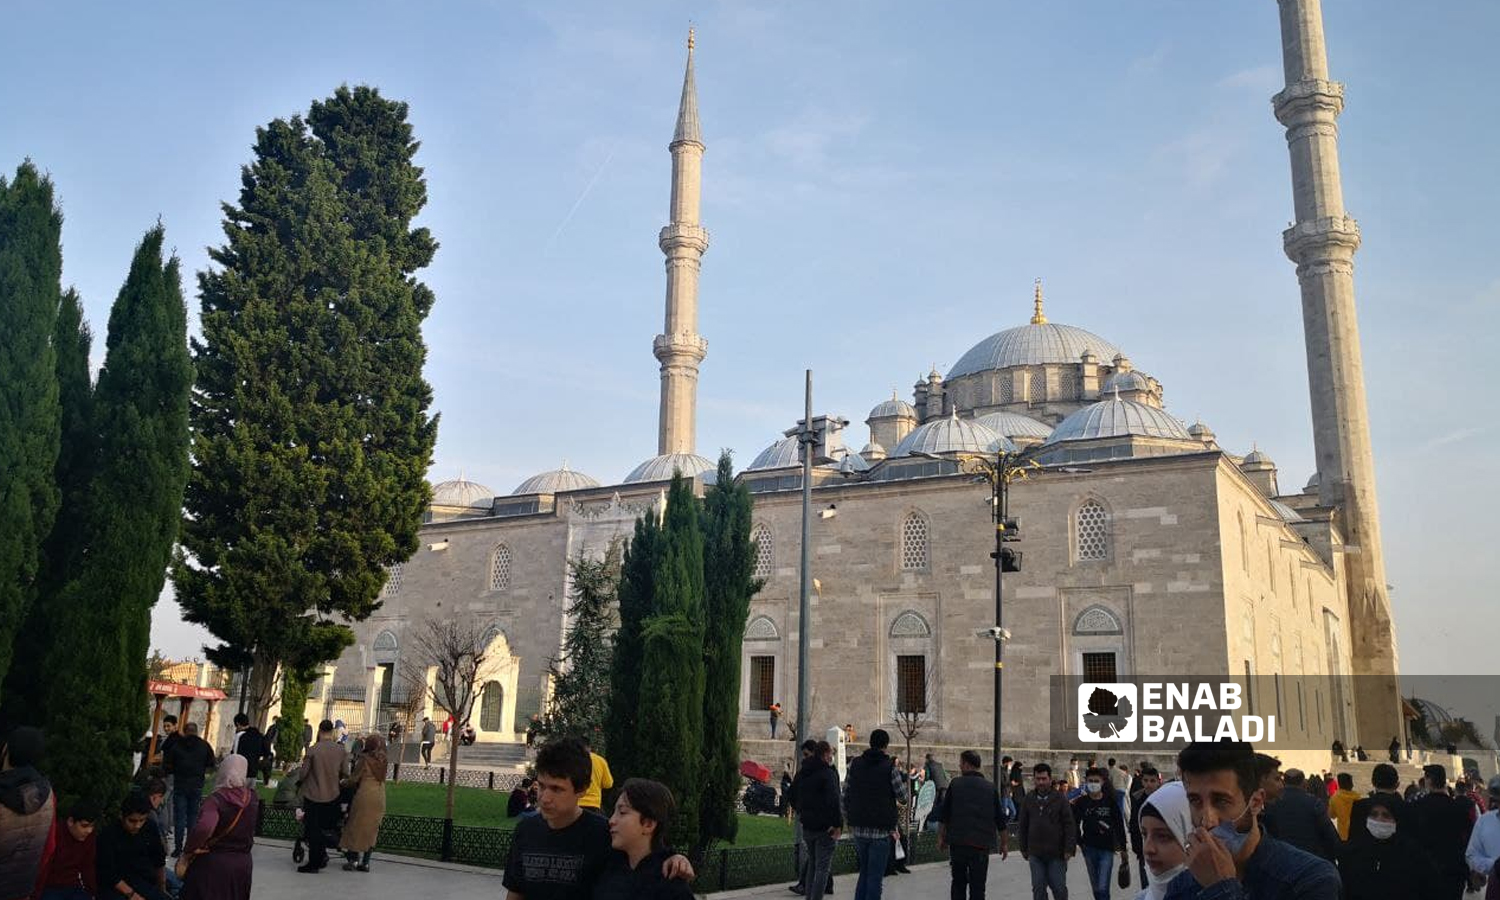 Syrians at the Fatih Mosque in Istanbul (Enab Baladi / Omran Okasha)